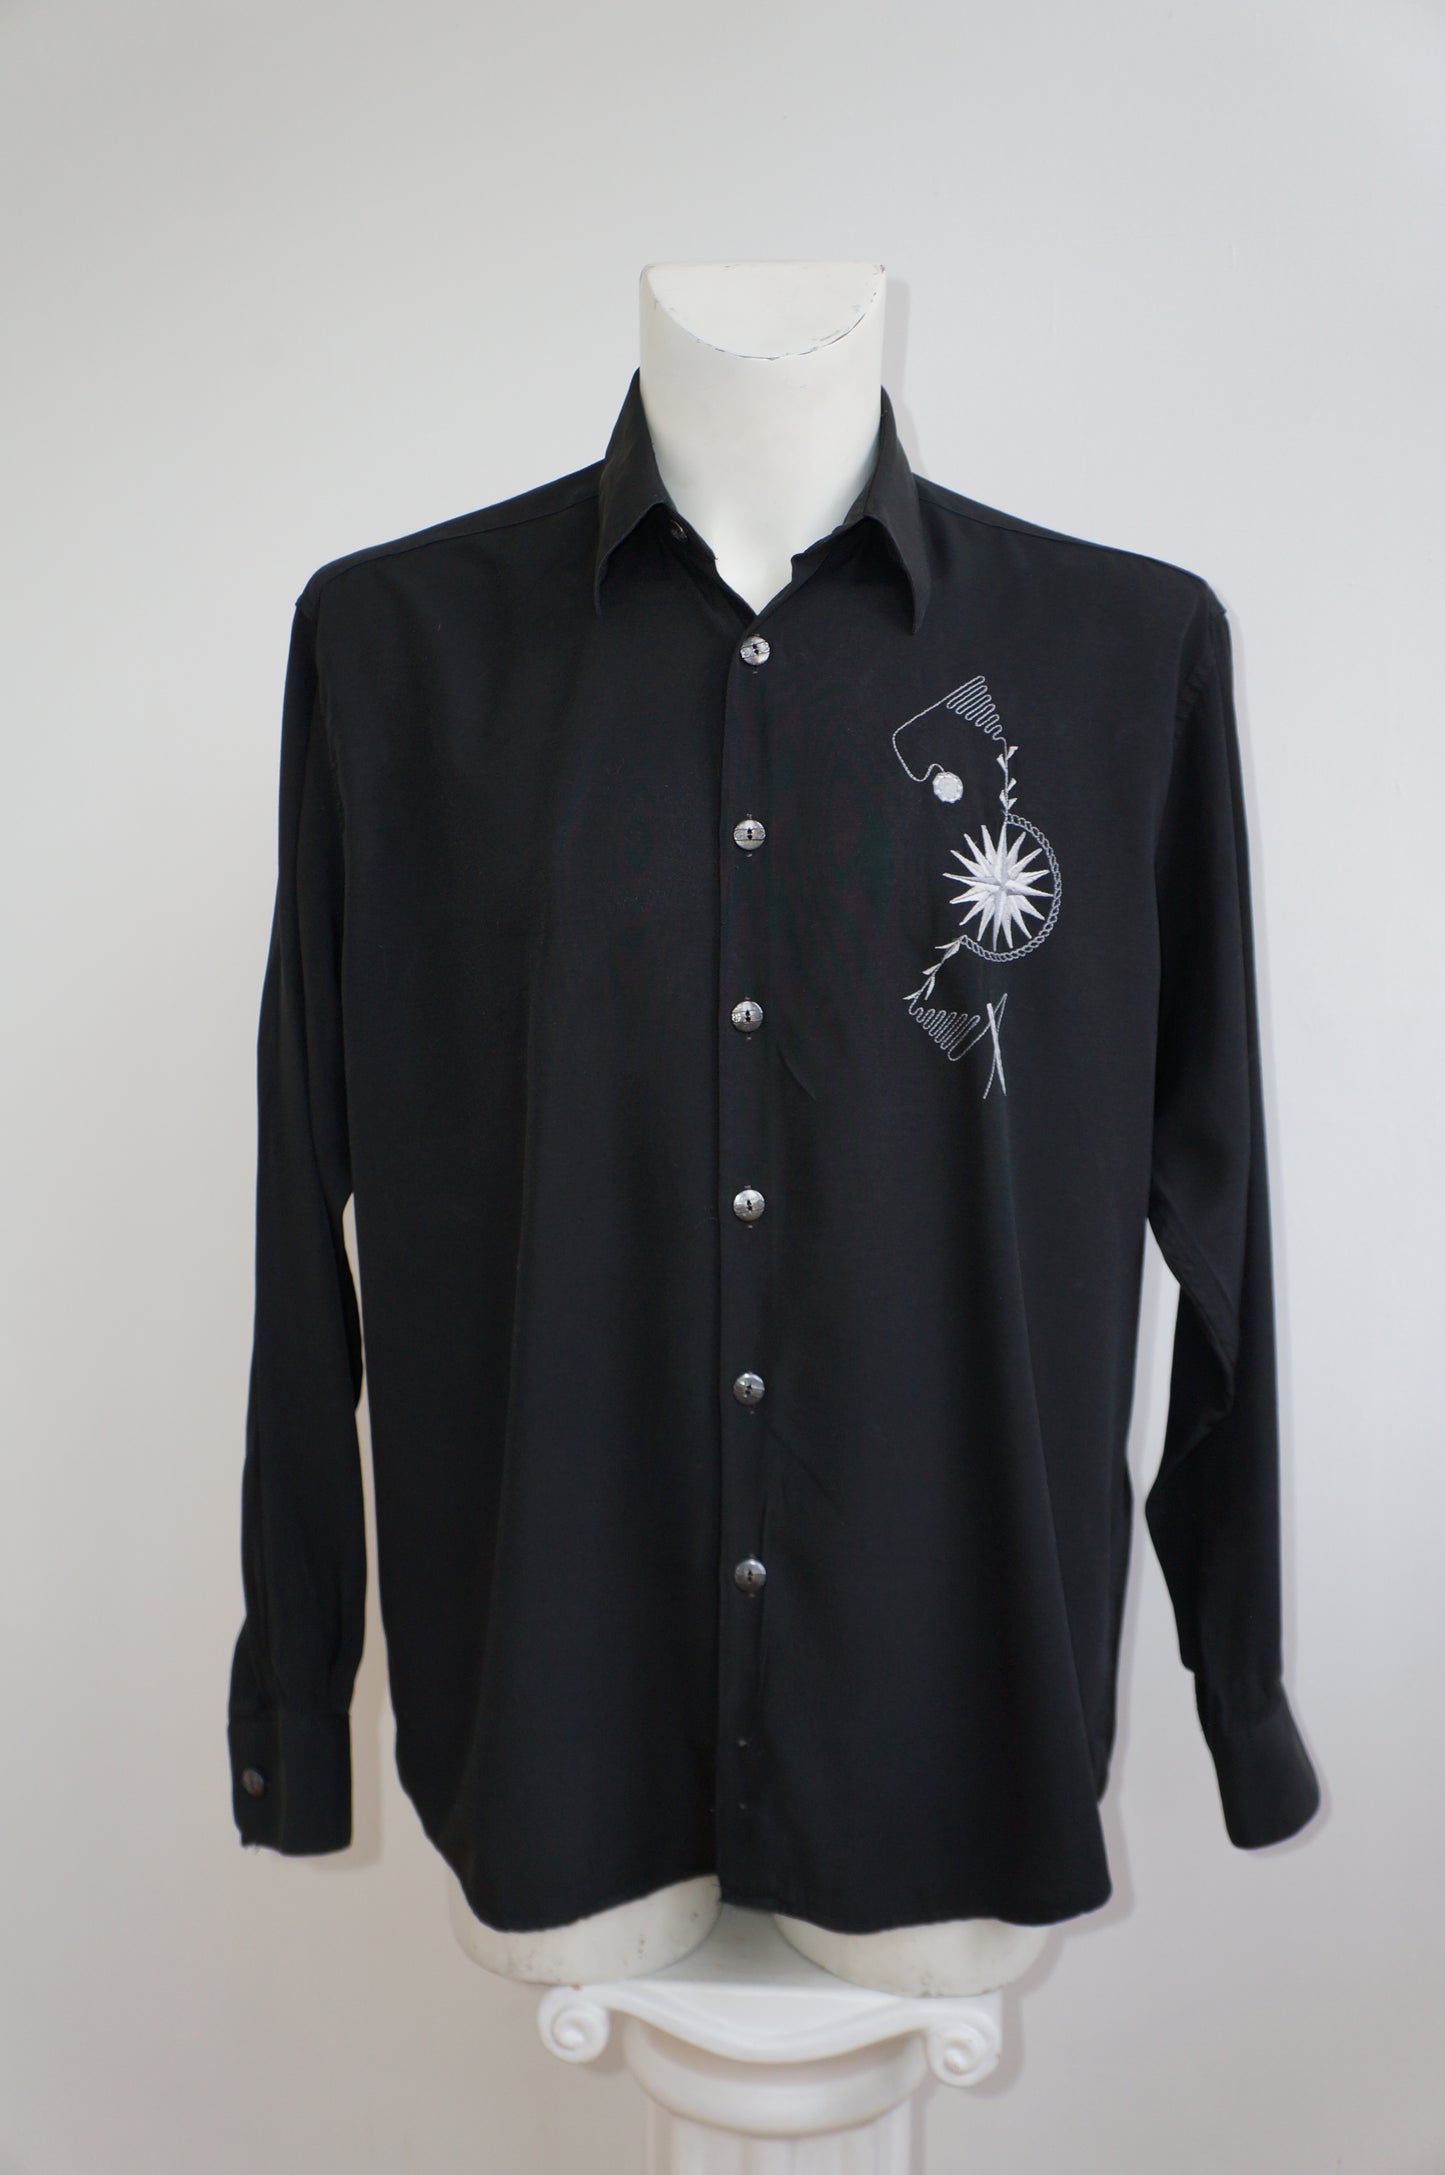 Embroidered rosette shirt